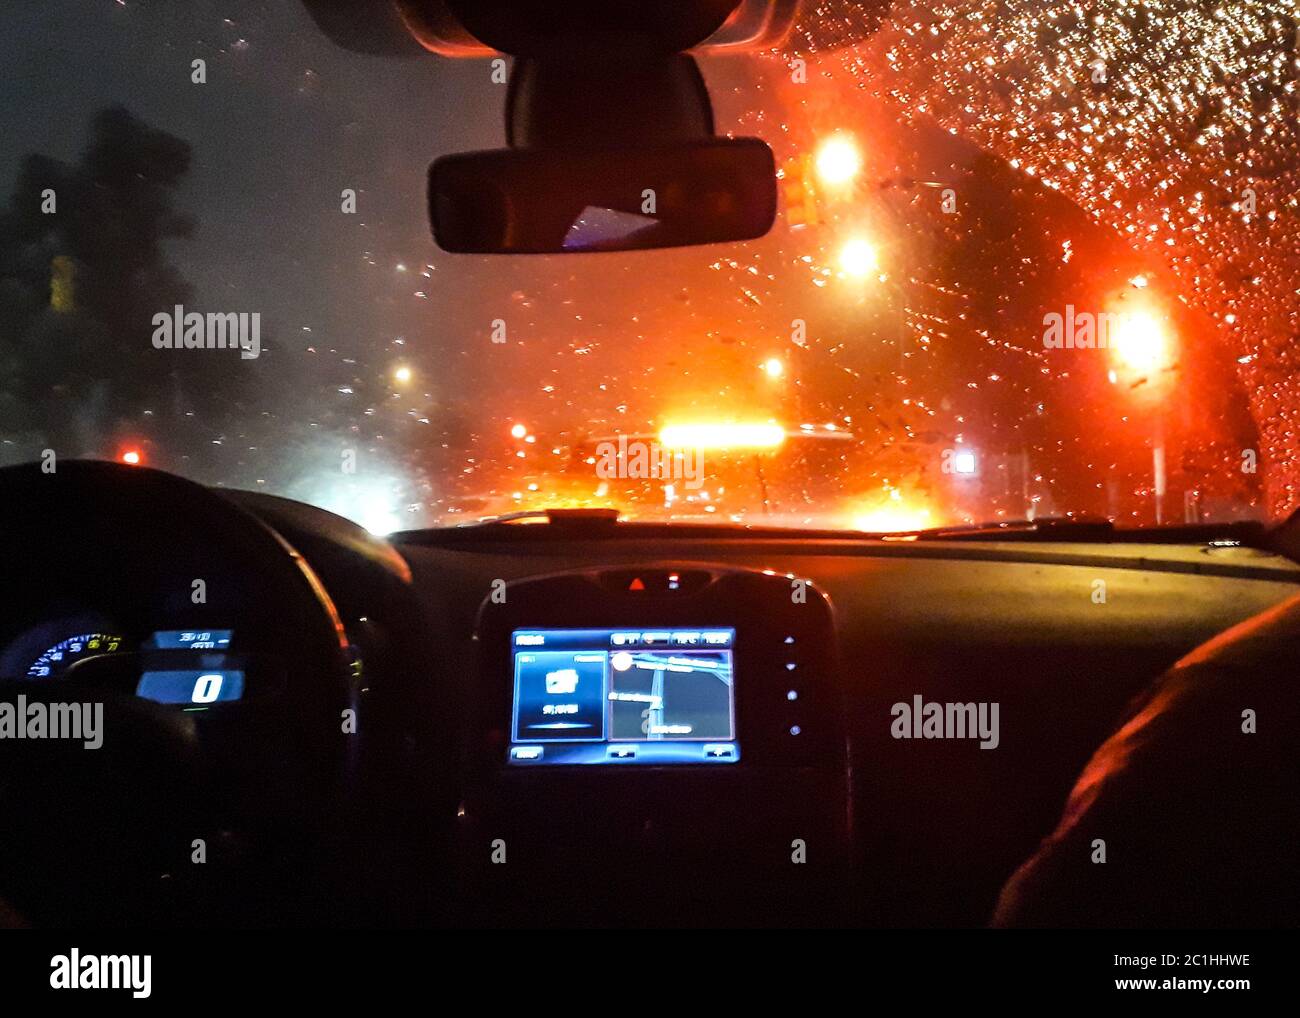 Inside Car Traffic Night Scene Stock Photo - Alamy